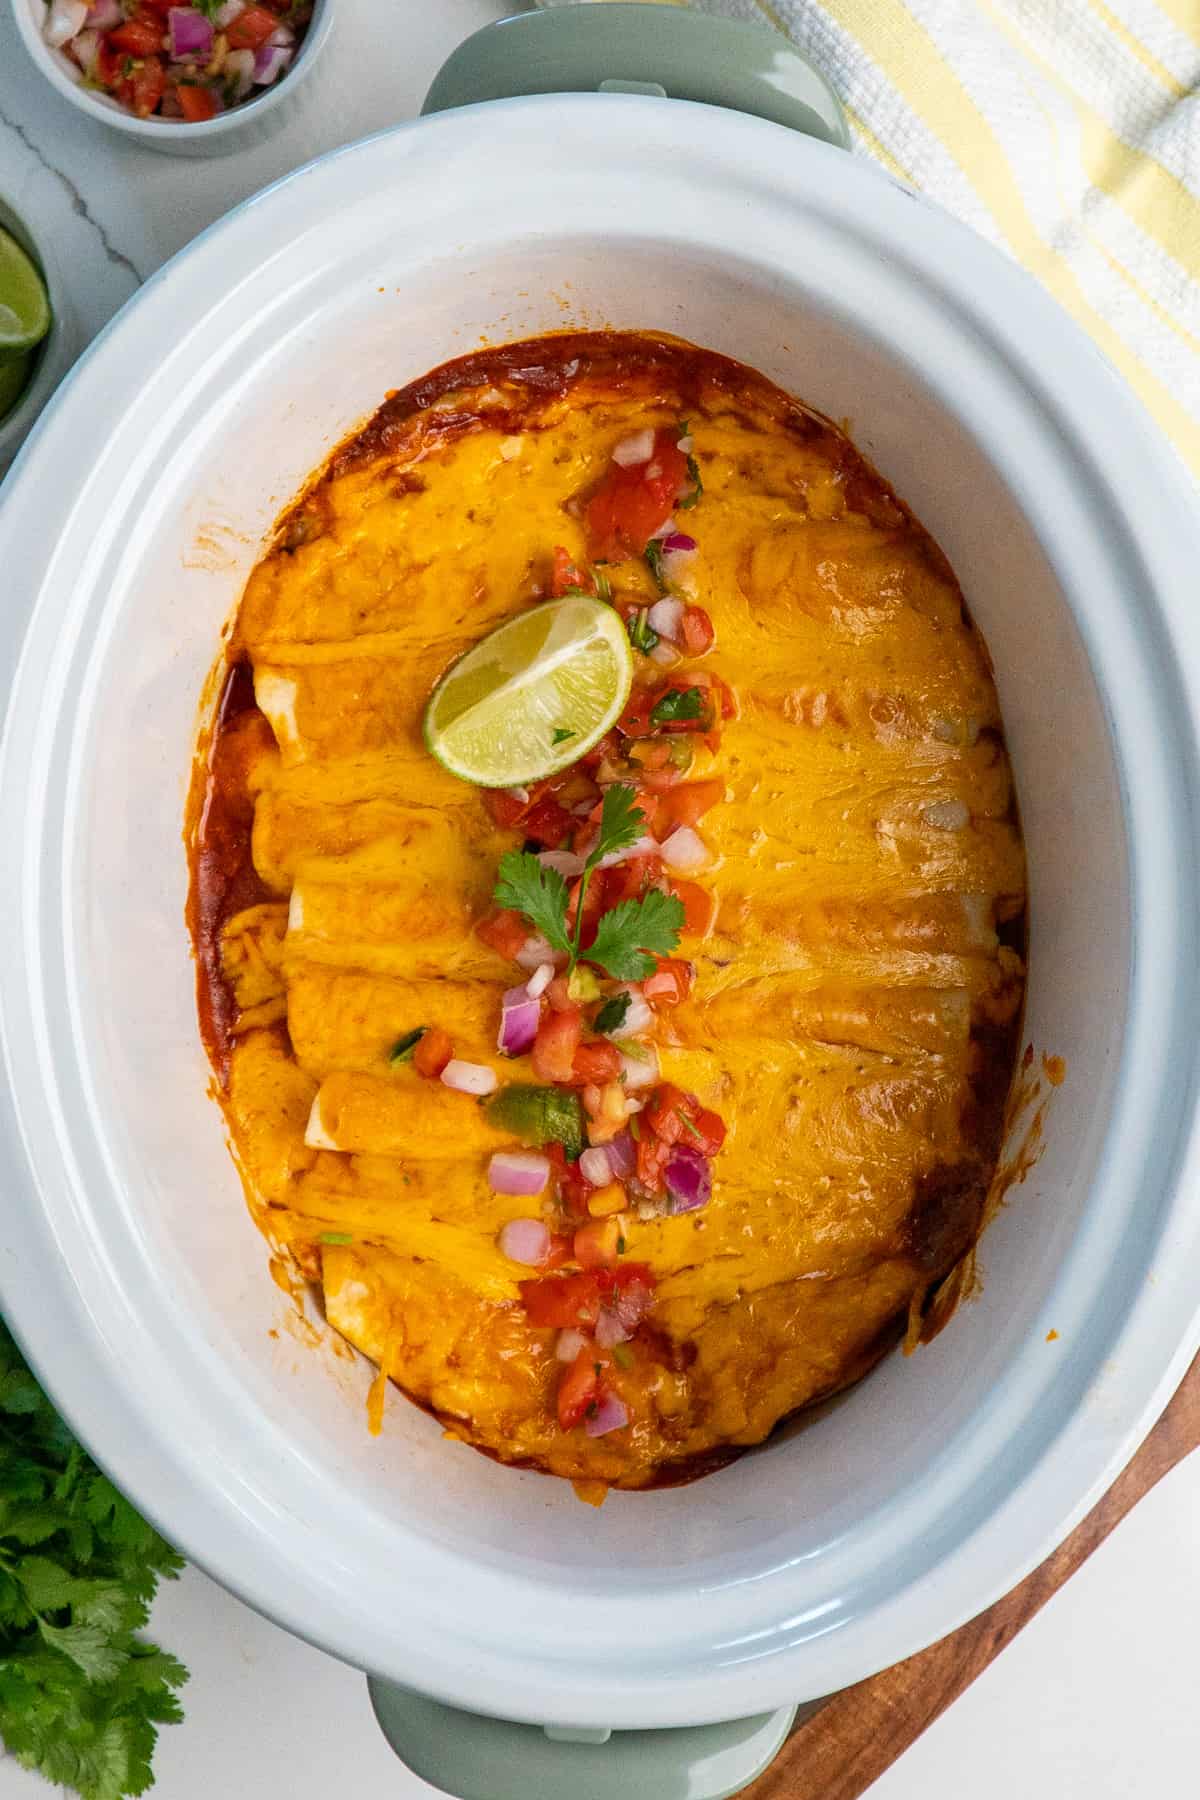 Crock Pot chicken enchiladas topped with pico de gallo and limes.